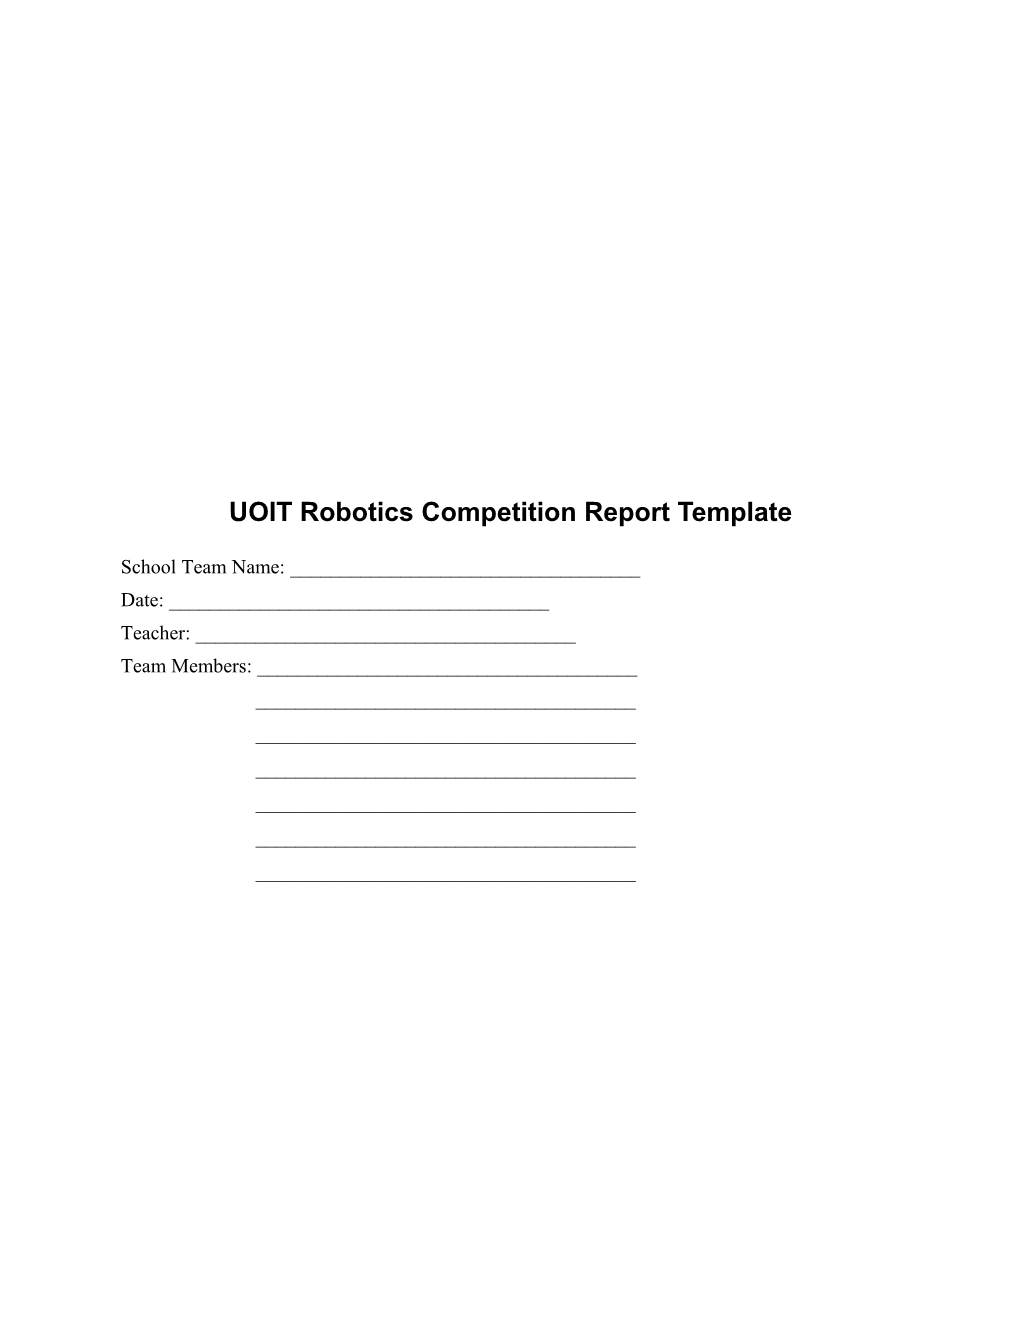 UOIT Robotics Competition Report Template